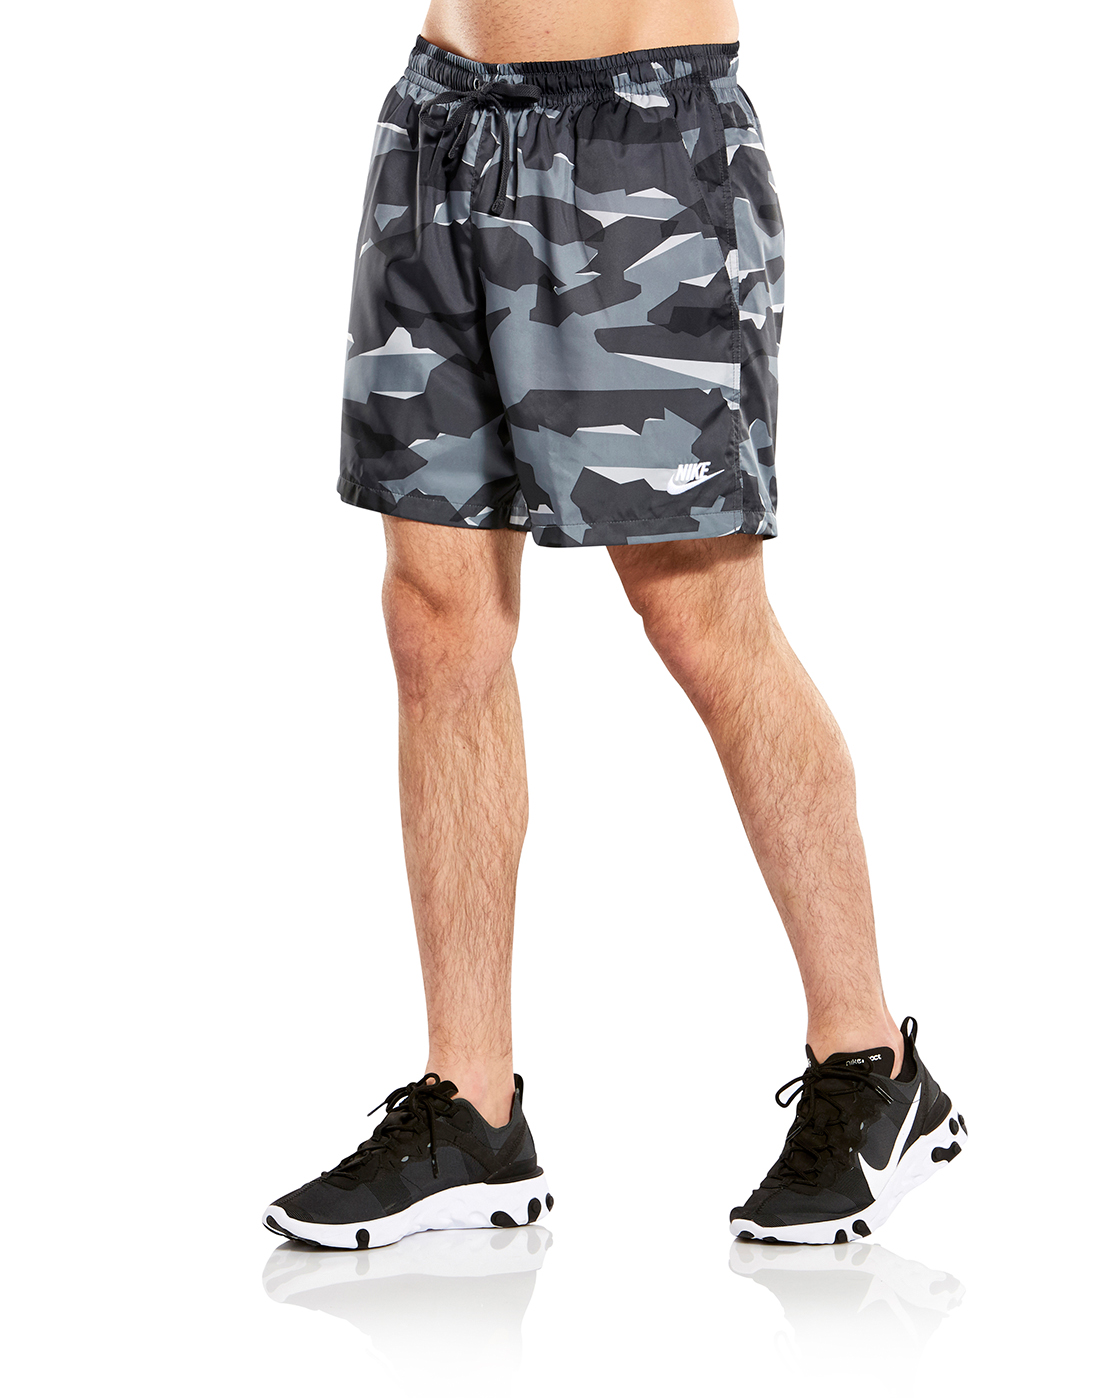 Men's Grey Camo Nike Shorts | Life Style Sports